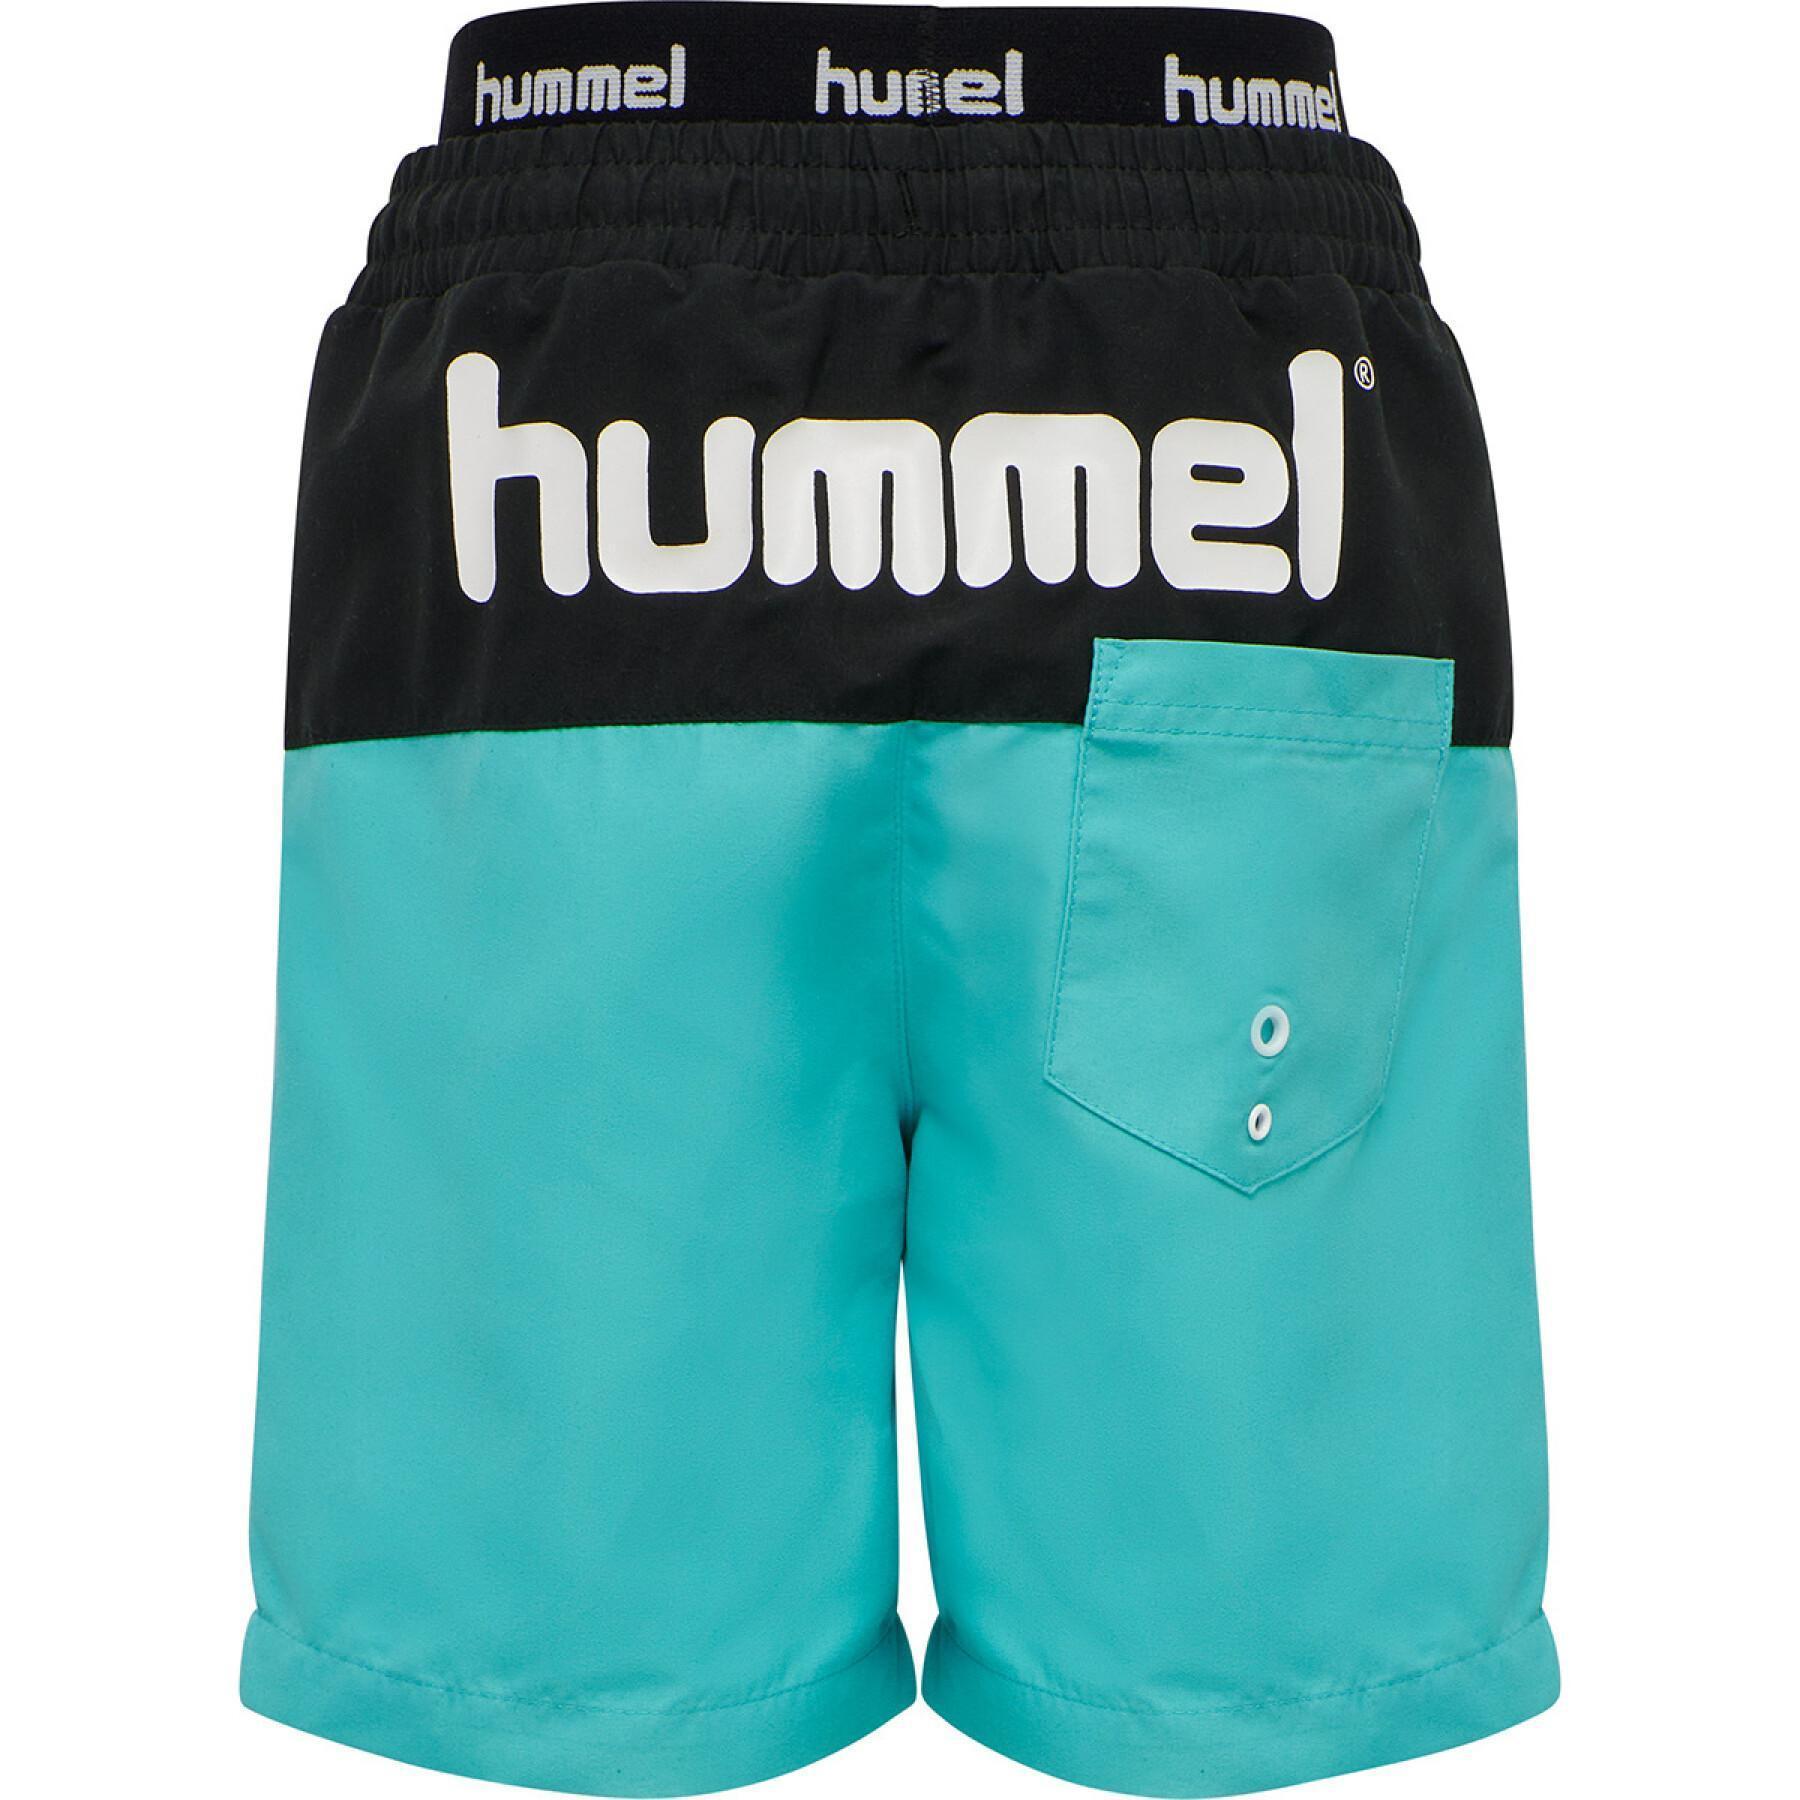 Children's swimming shorts Hummel Garner board